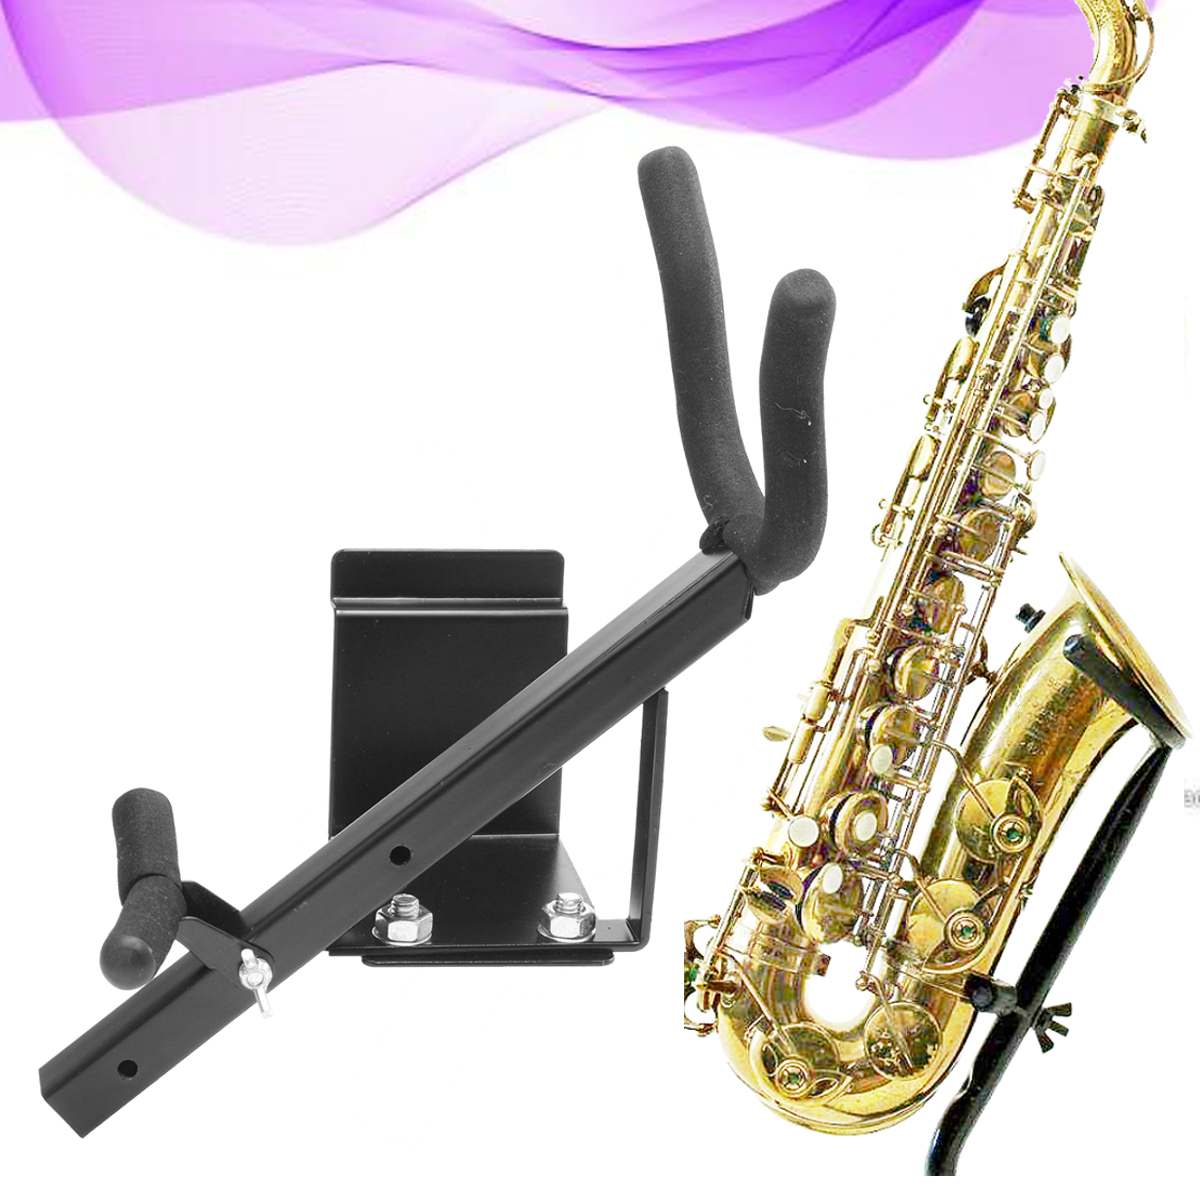 Metal Alto Saxophone hanger Wall Mount Hanger Stand Holder Musical Instrument protecter saving space